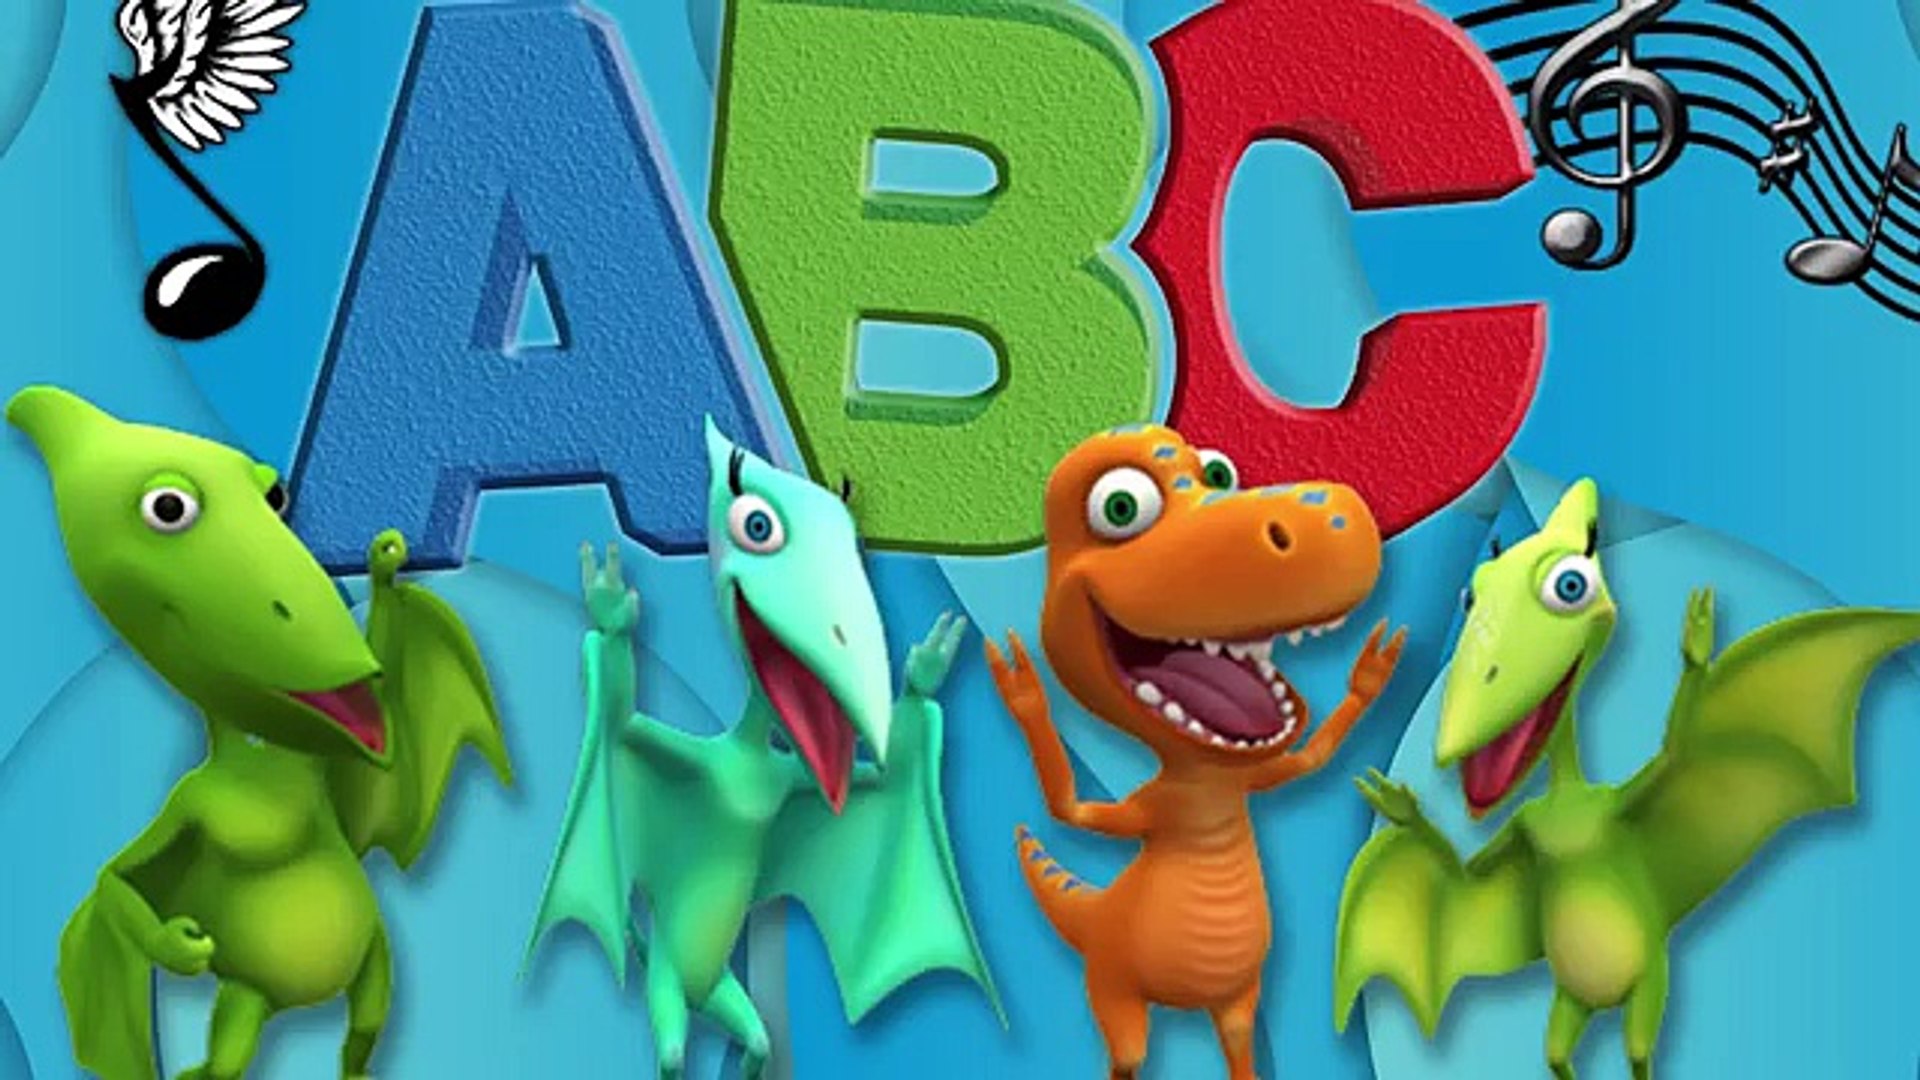 ⁣spanish alphabet song for children - abc songs in spanish - pronunciation for kids -